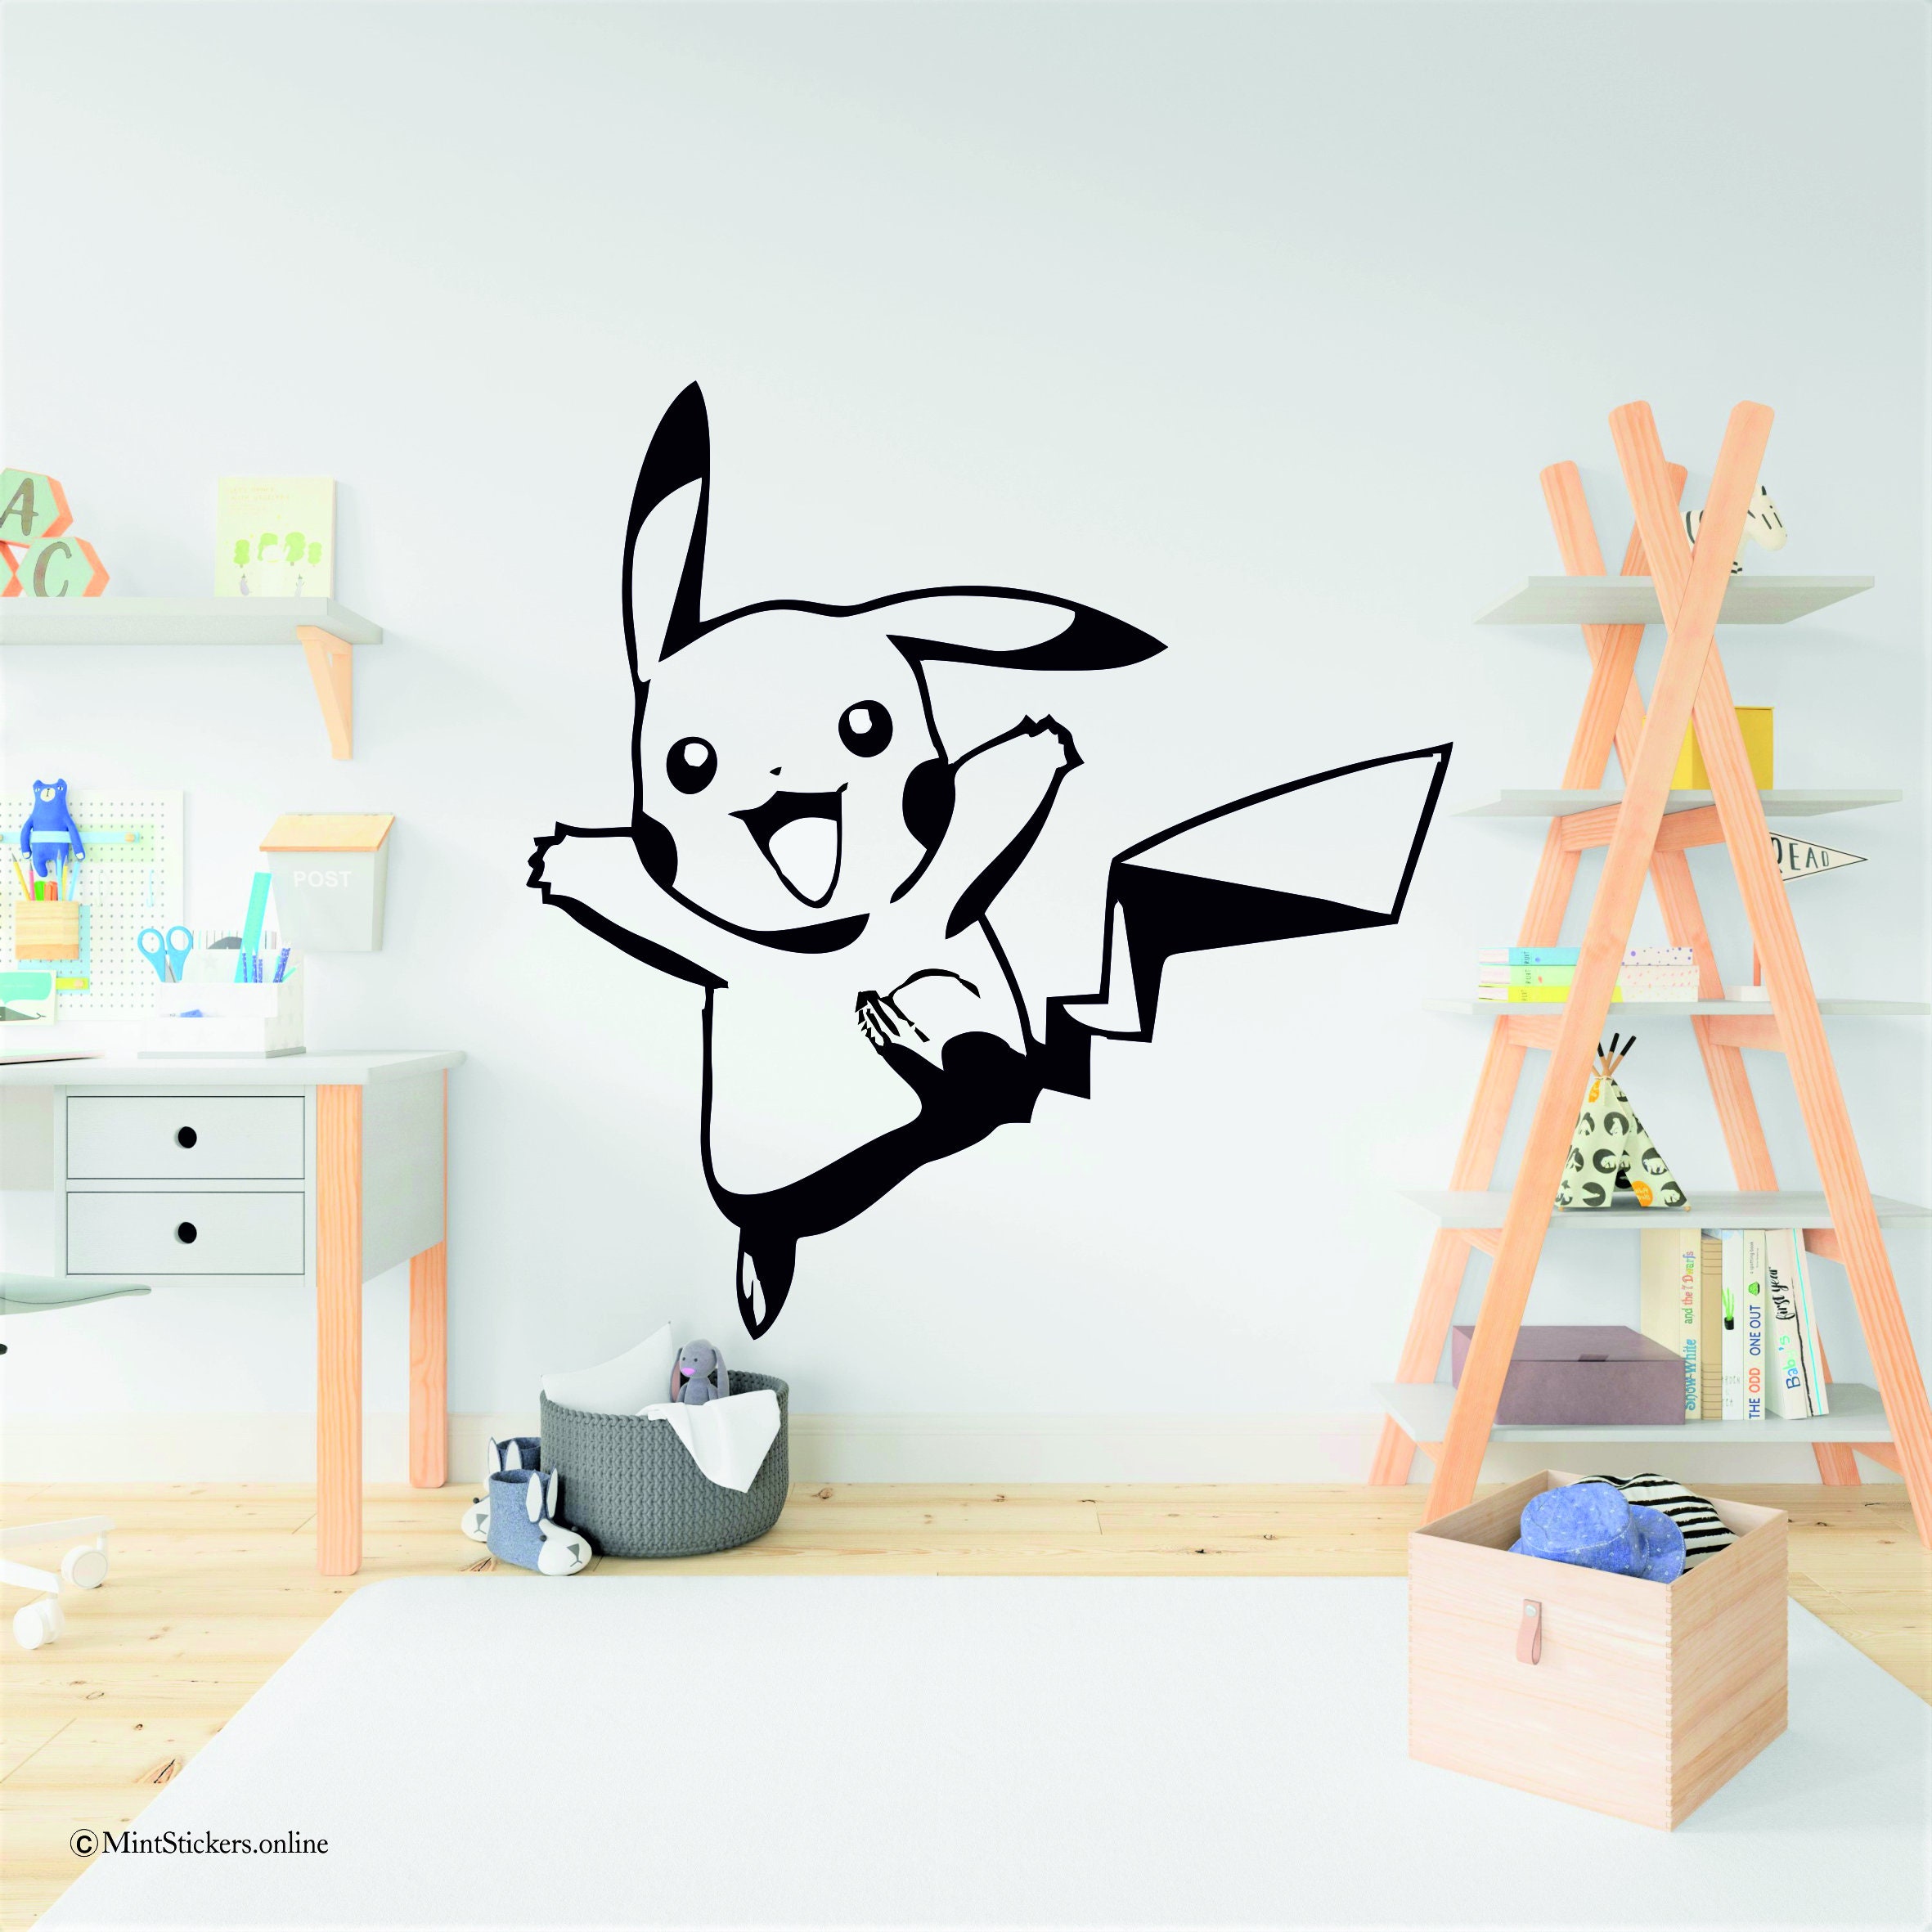 5"-8" Pokemon pikachu anime wall sticker glossy cut out border character 